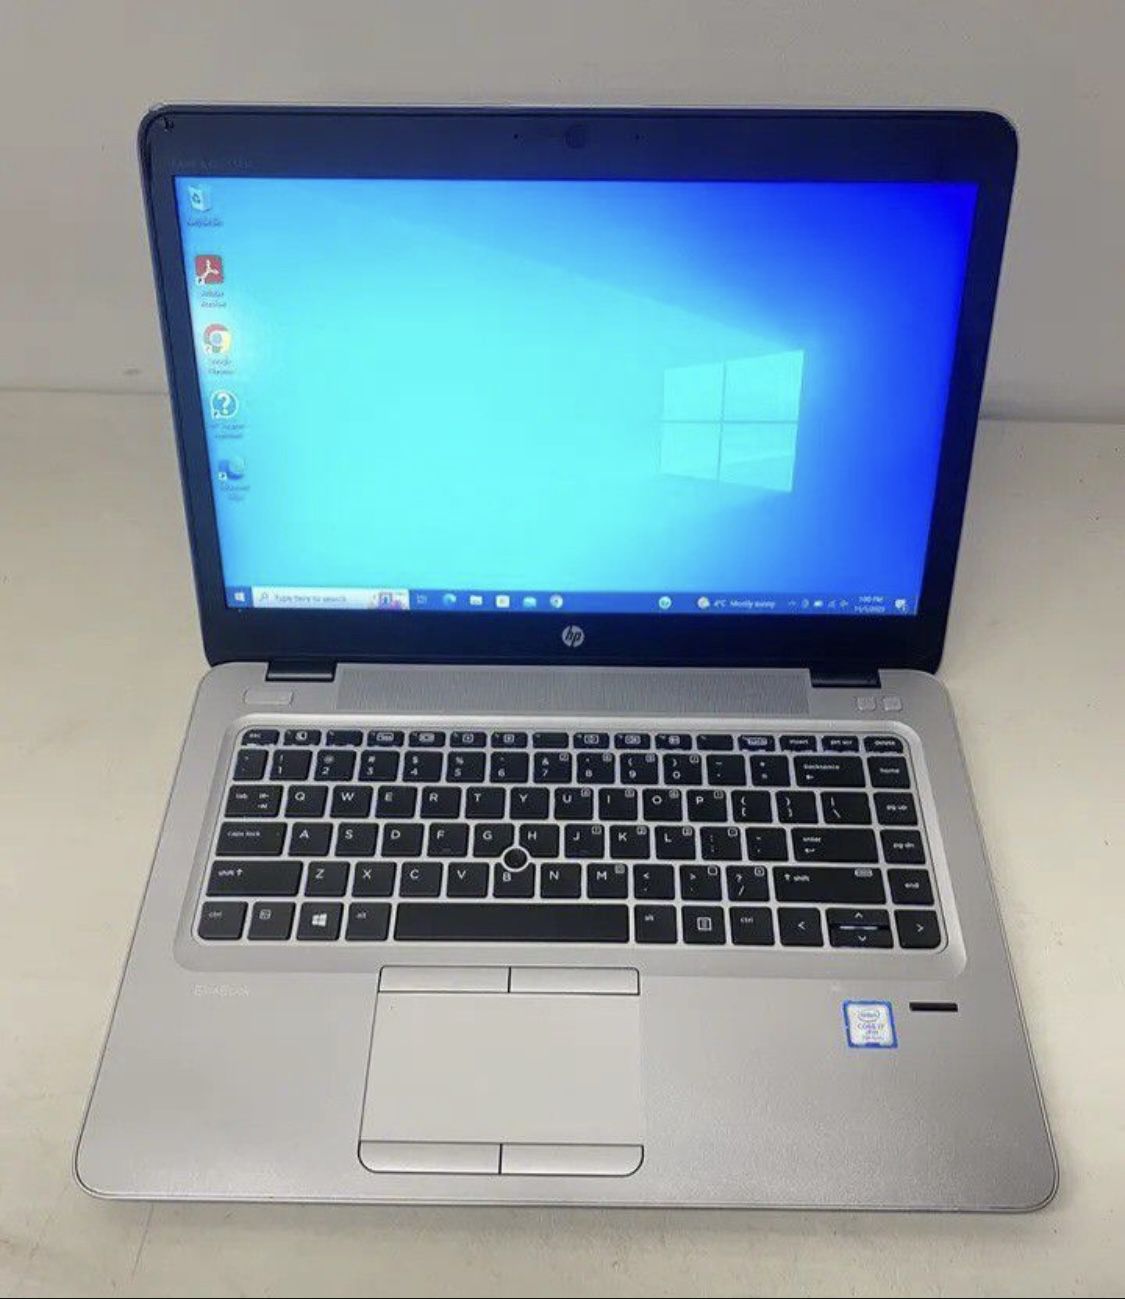 Touchscreen HP Notebook 840 G4 Windows Intel Core i7-7600u 2.8 GHz 16 GB RAM 256 GB SSD  High-grade Business PC  